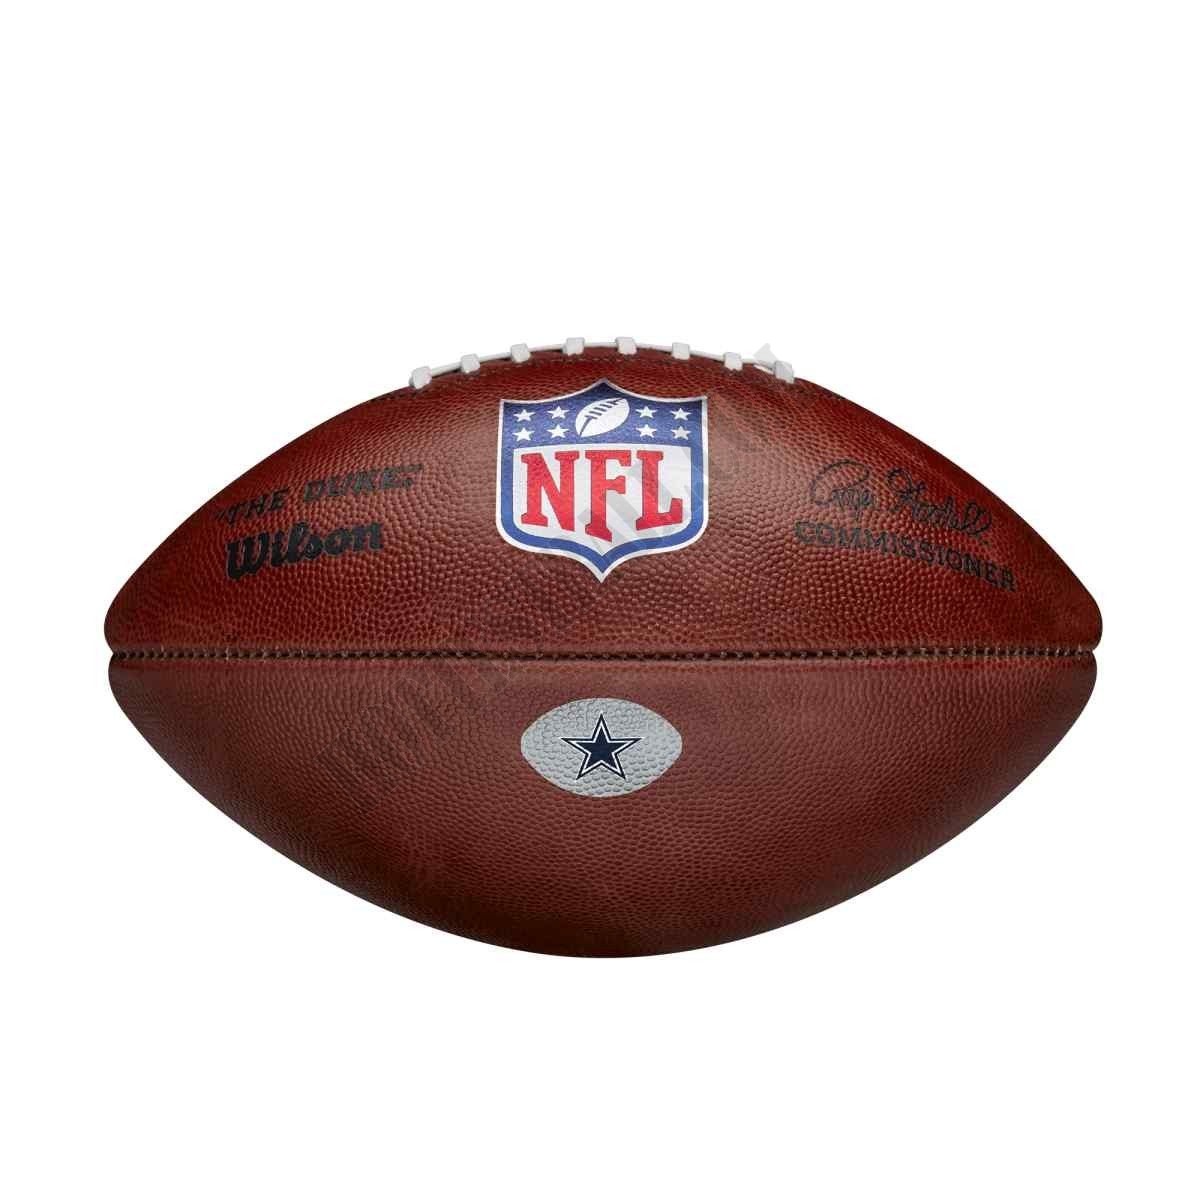 The Duke Decal NFL Football - Dallas Cowboys ● Wilson Promotions - The Duke Decal NFL Football - Dallas Cowboys ● Wilson Promotions